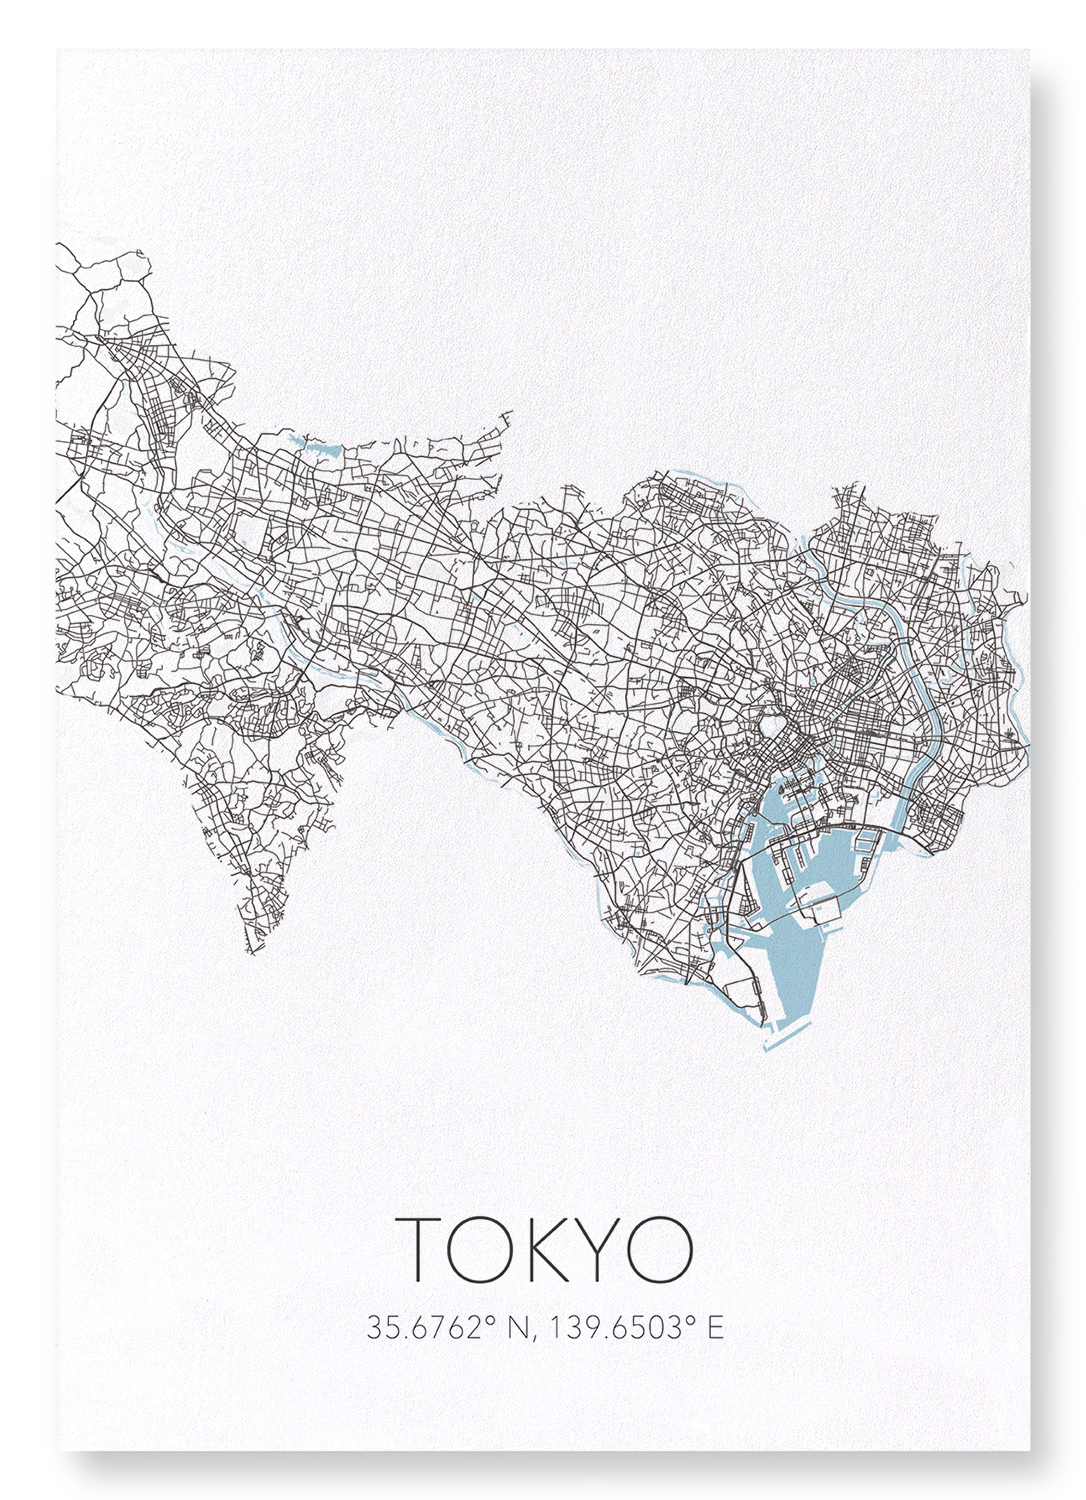 TOKYO CUTOUT: Map Cutout Art Print